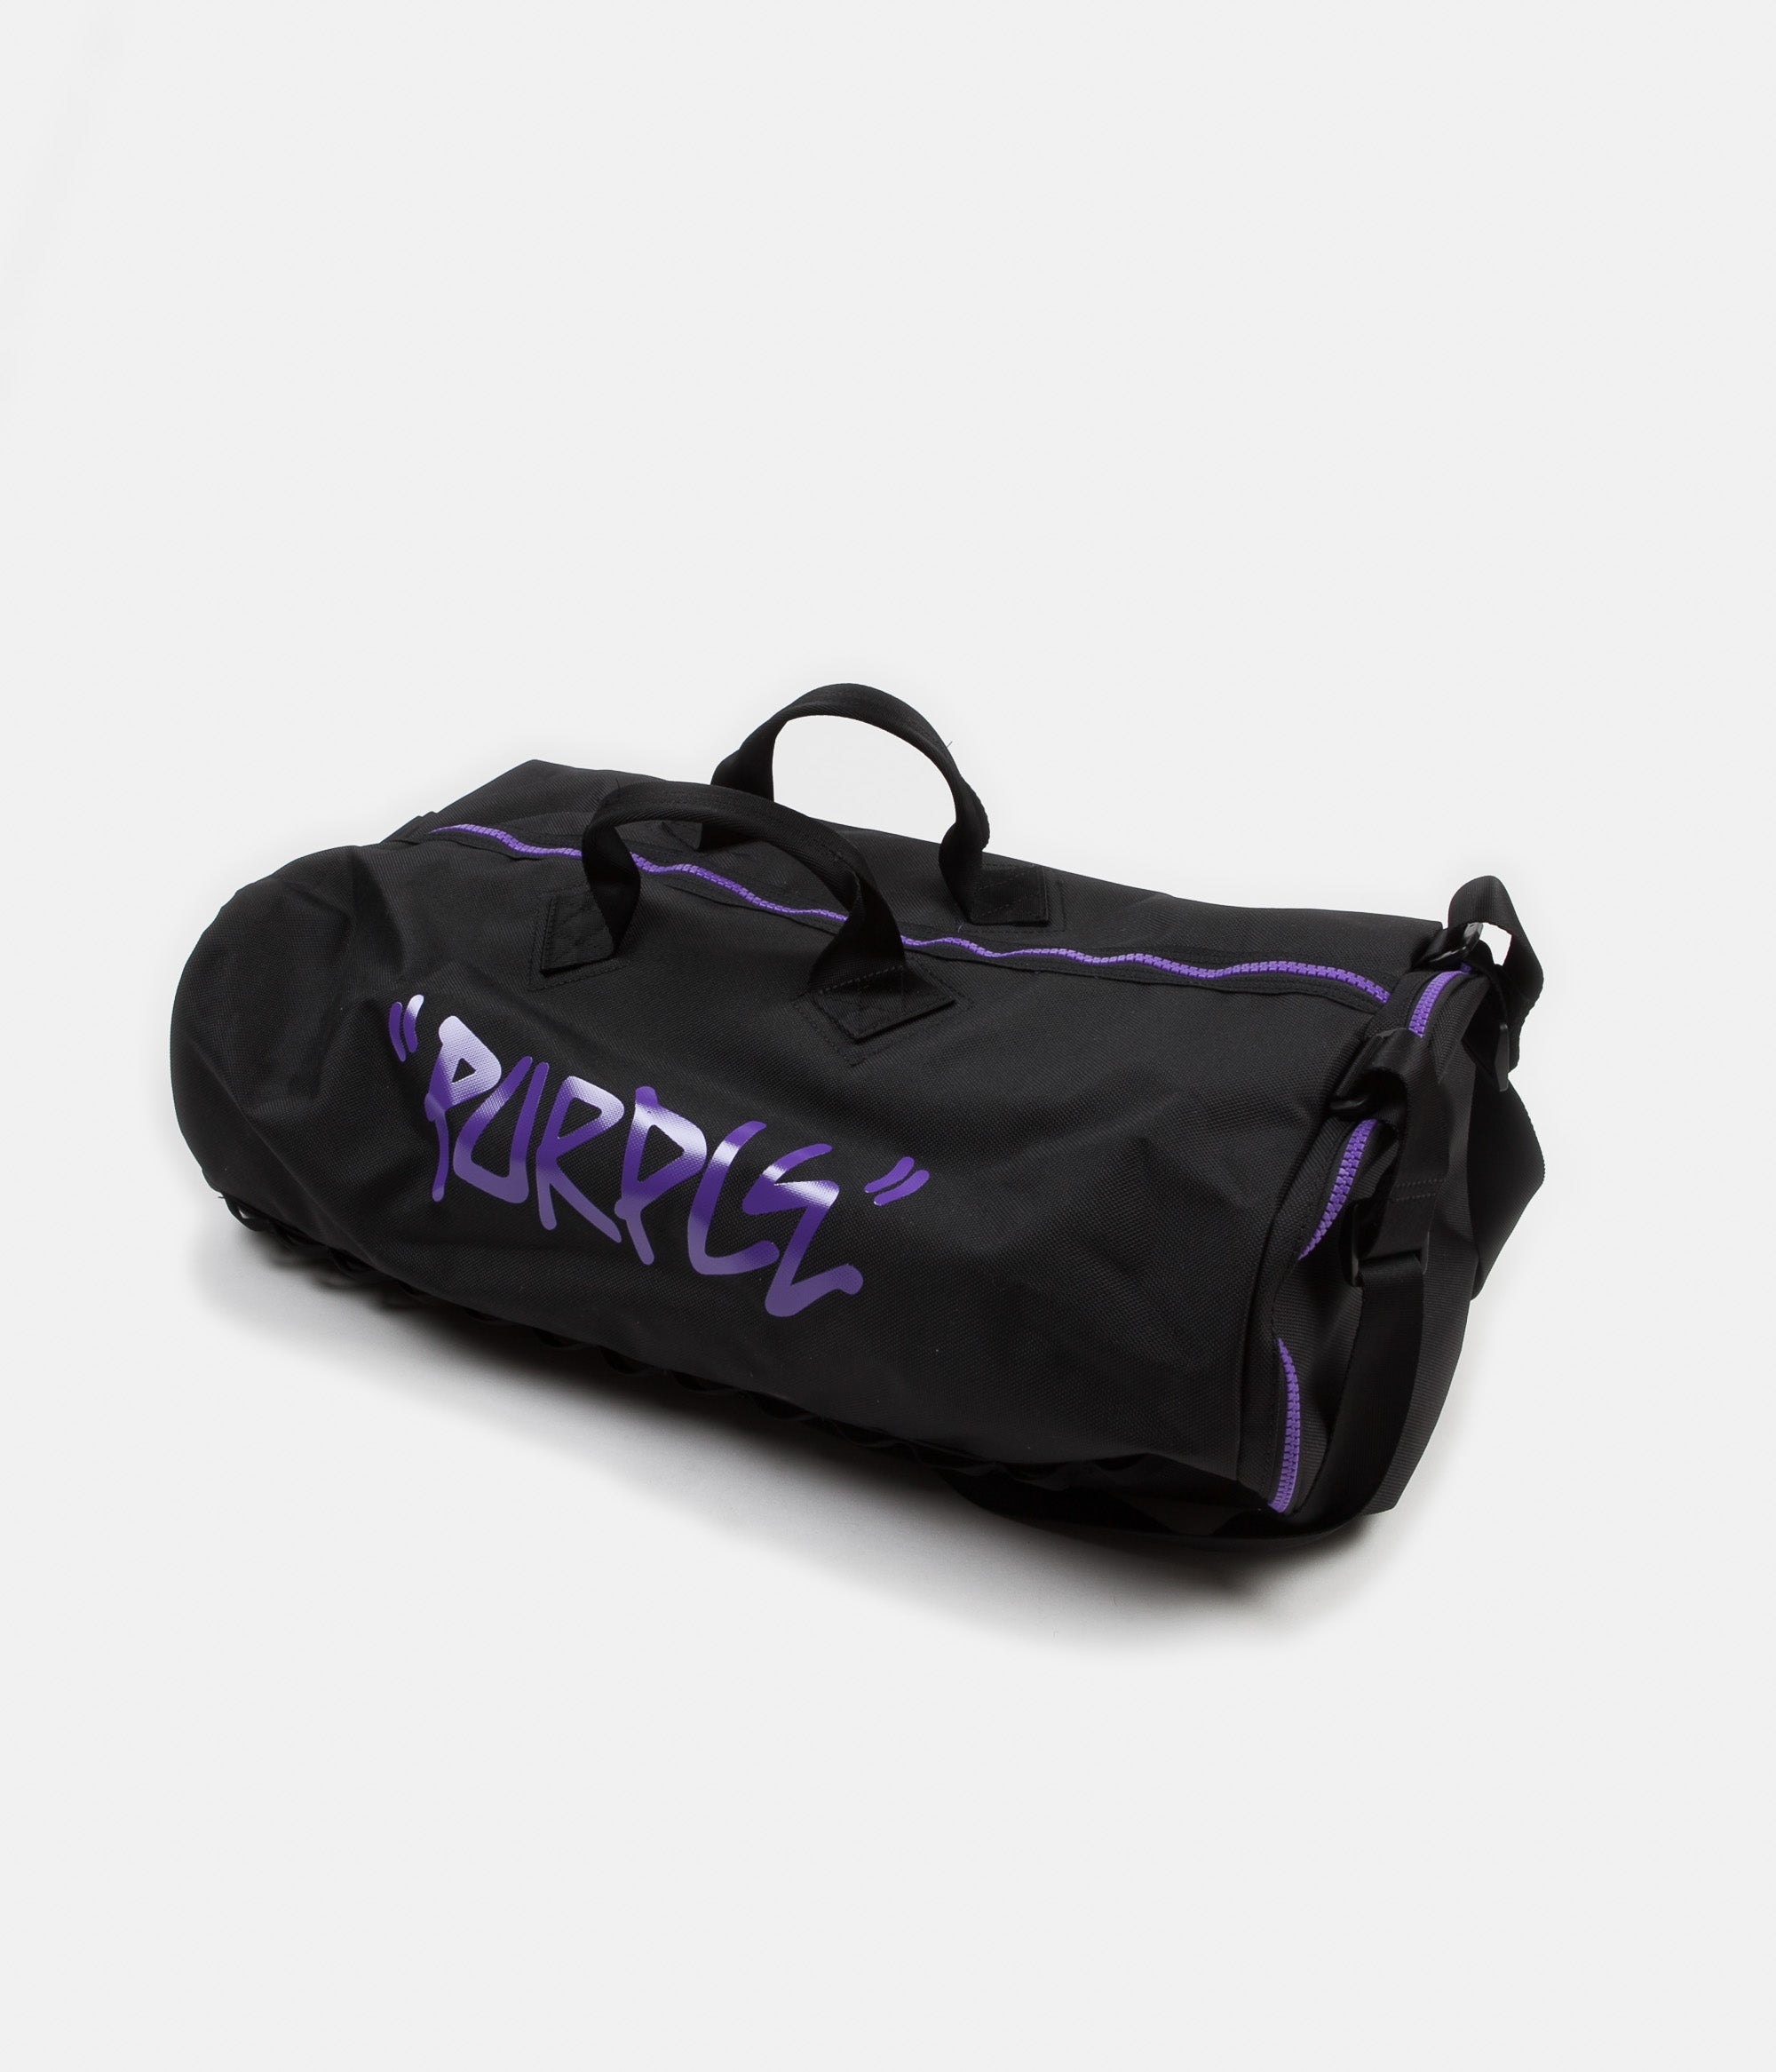 converse purple pack